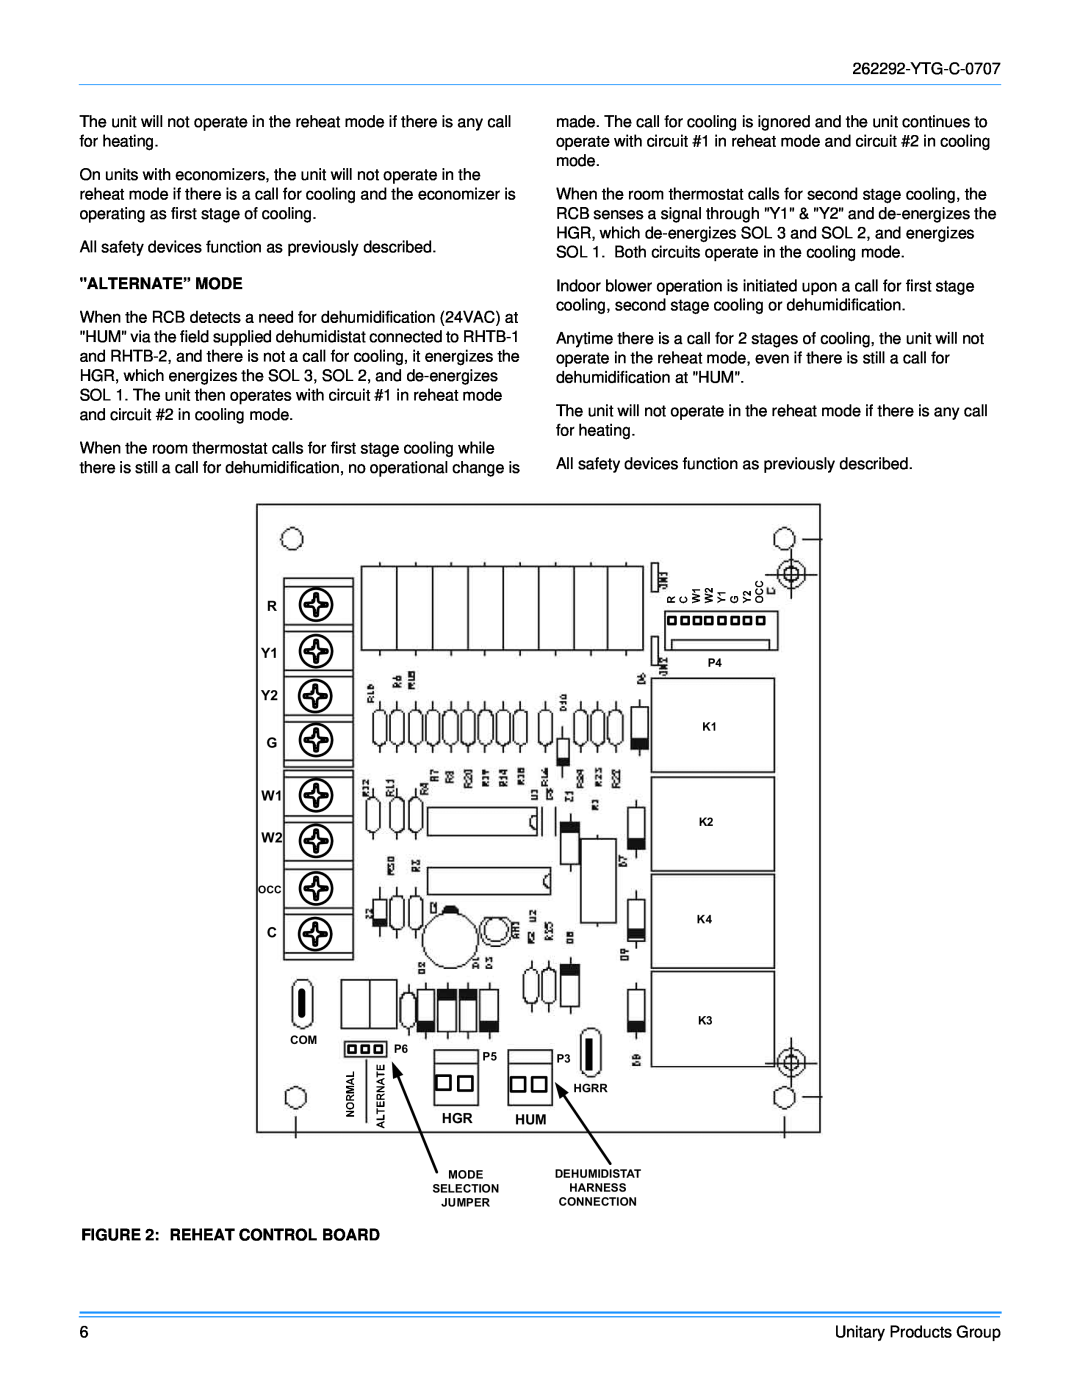 York WR 180 warranty Alternate” Mode, Reheat Control Board 